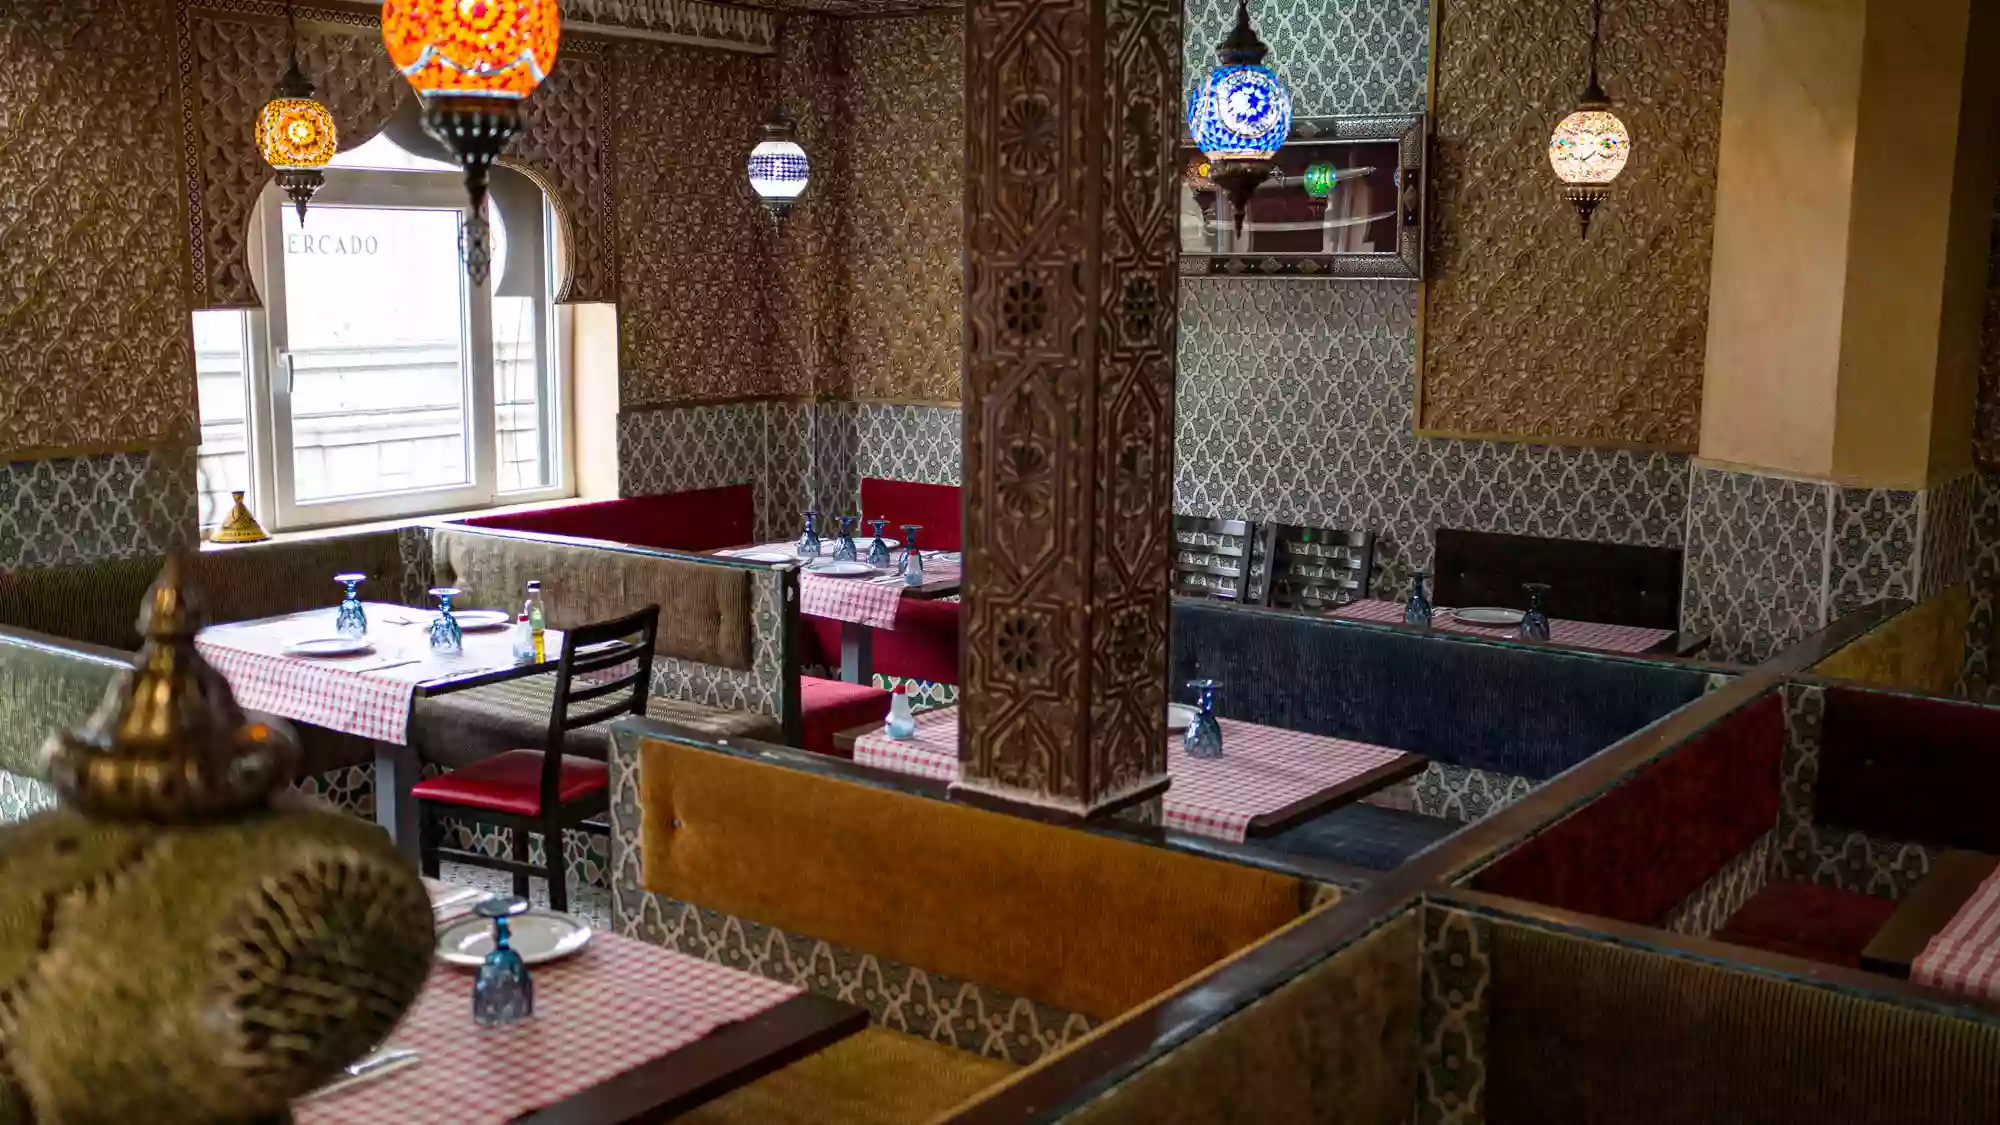 restaurante Marrakech